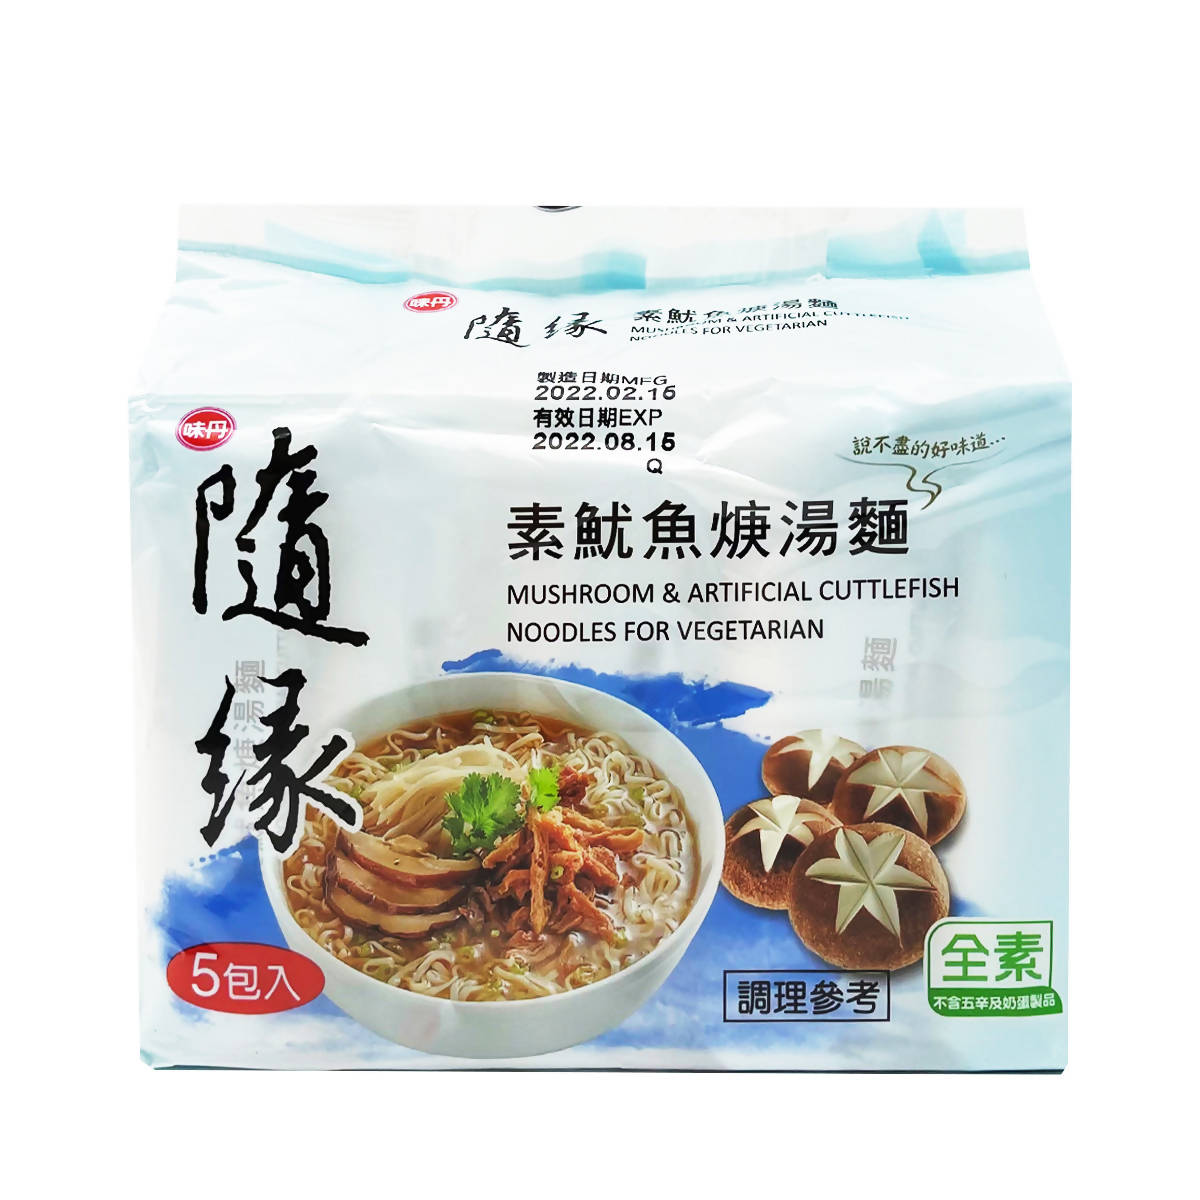 Taiwan Direct Mail【Weidan】VEDAN Suiyuansu Squid Noodles 470g 5pcs 